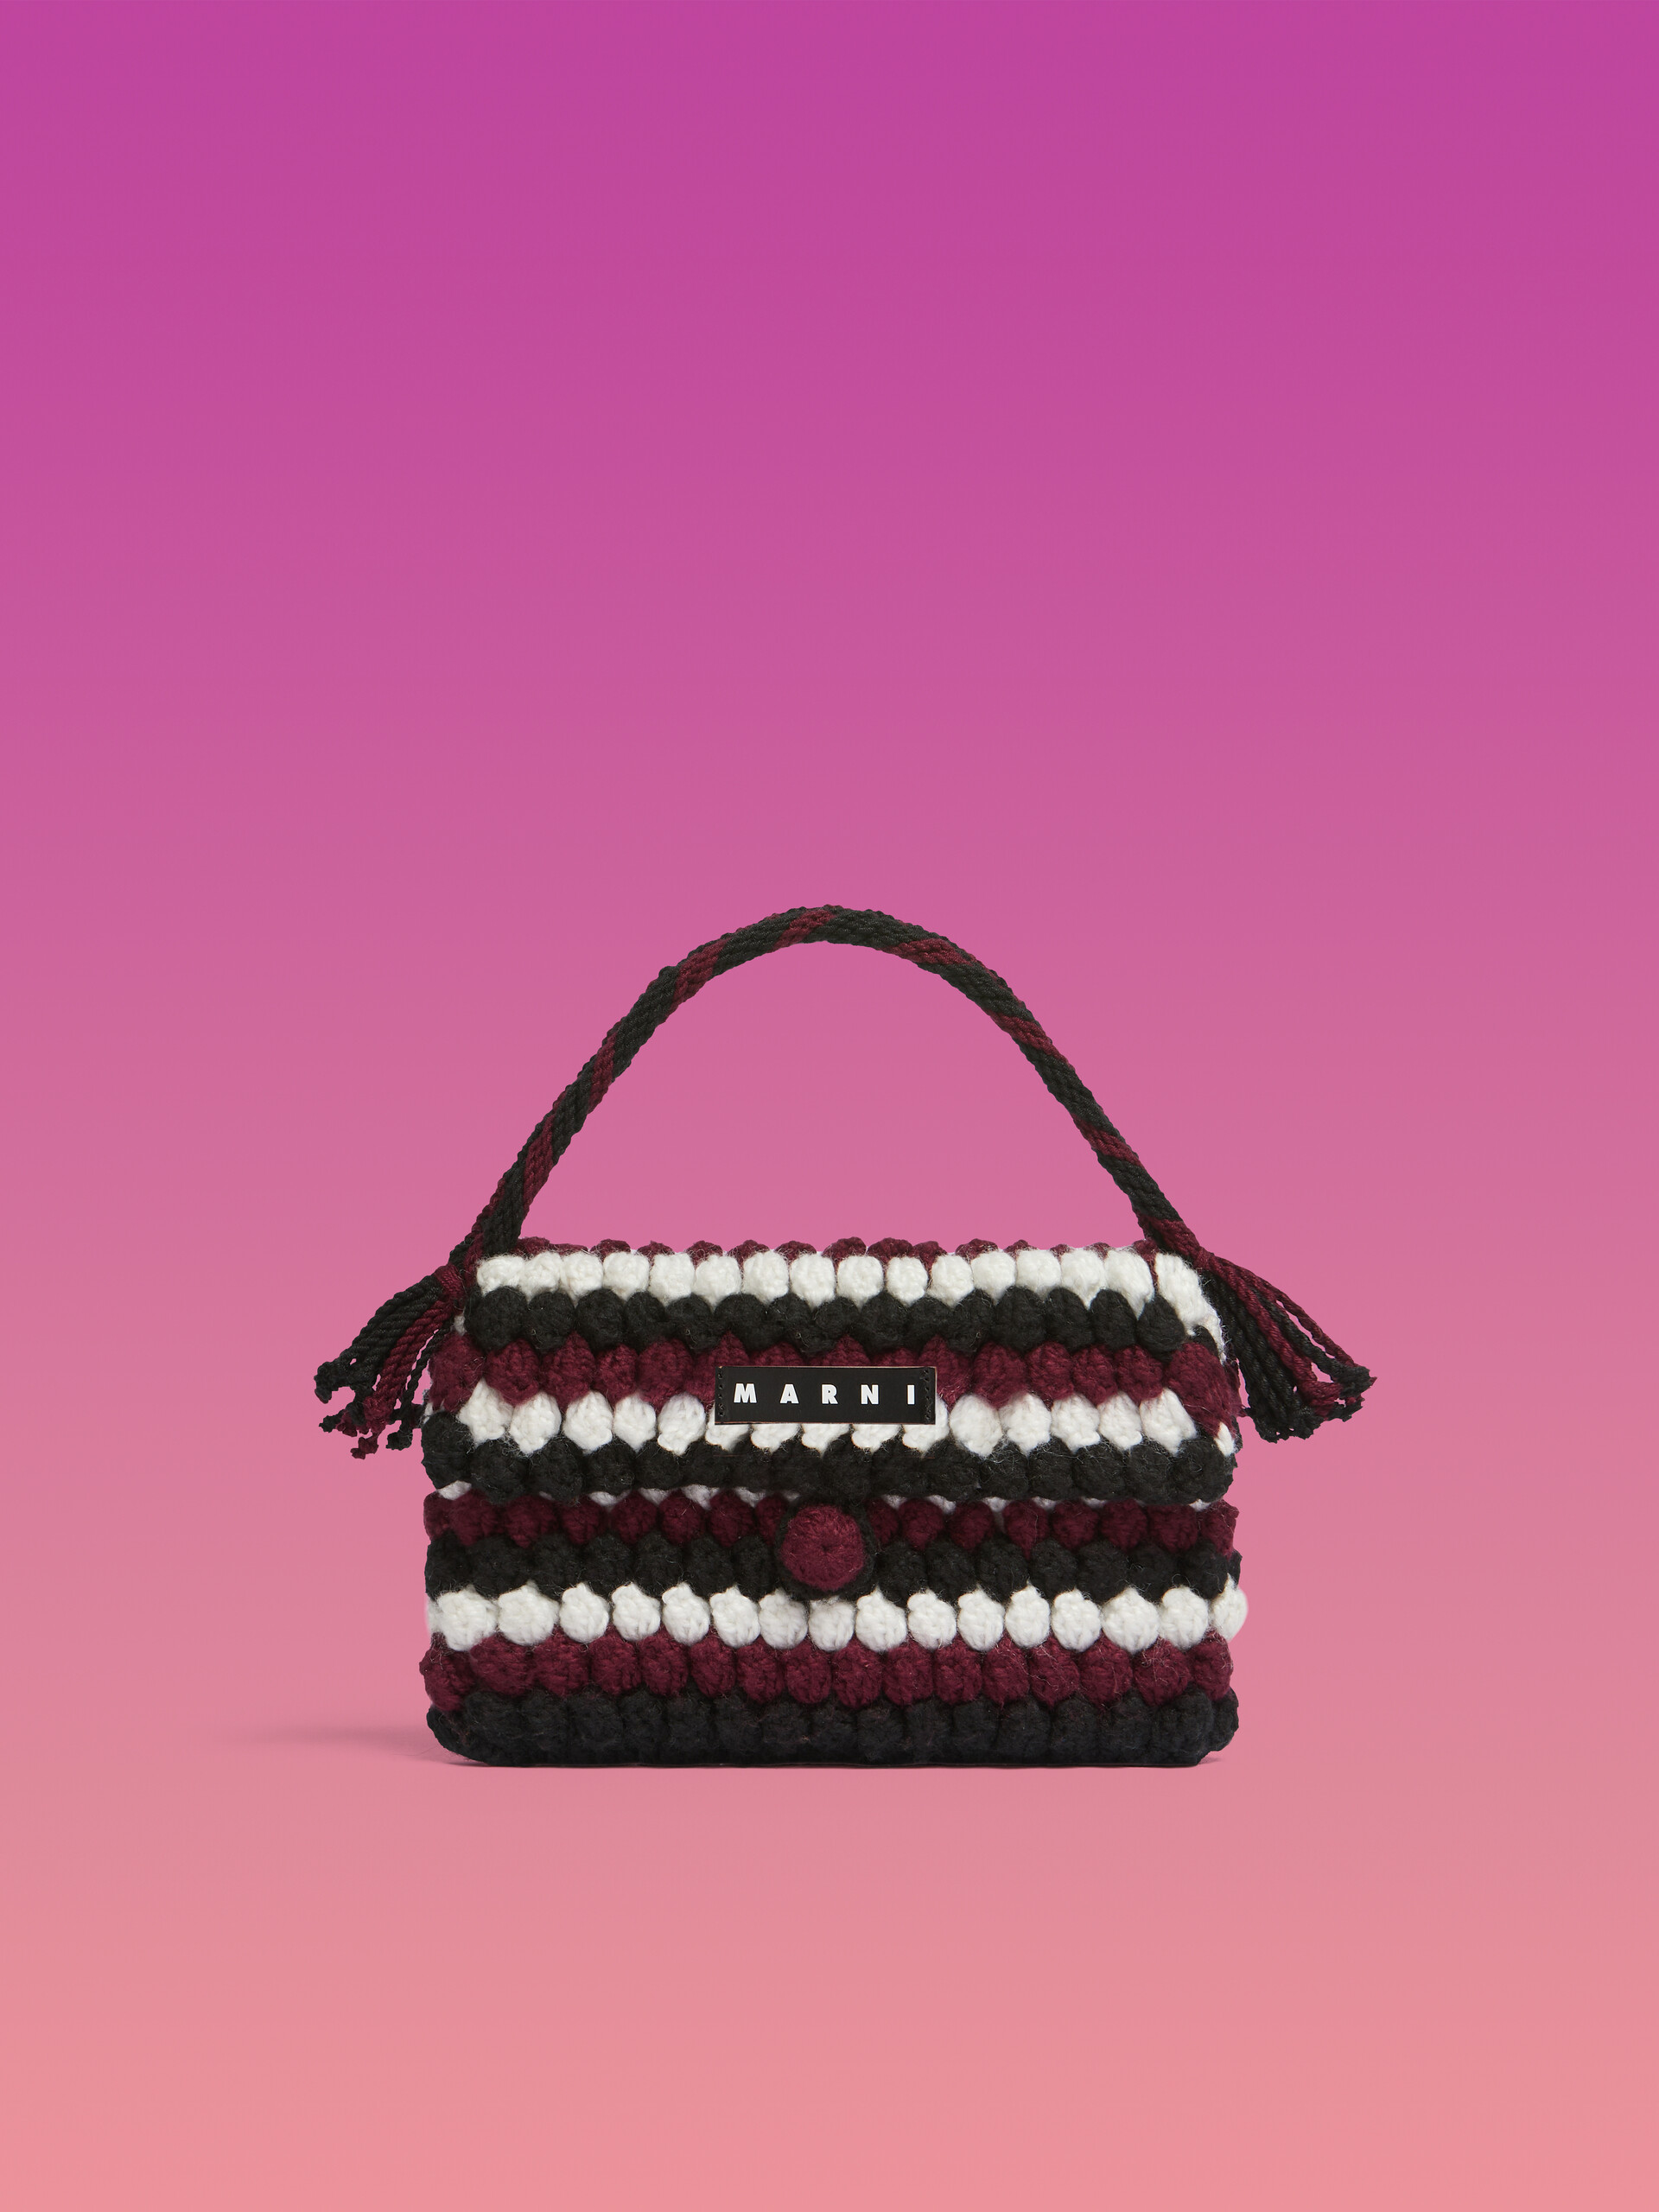 Blue Striped Crochet Marni Market Bread Handbag - Shopping Bags - Image 1